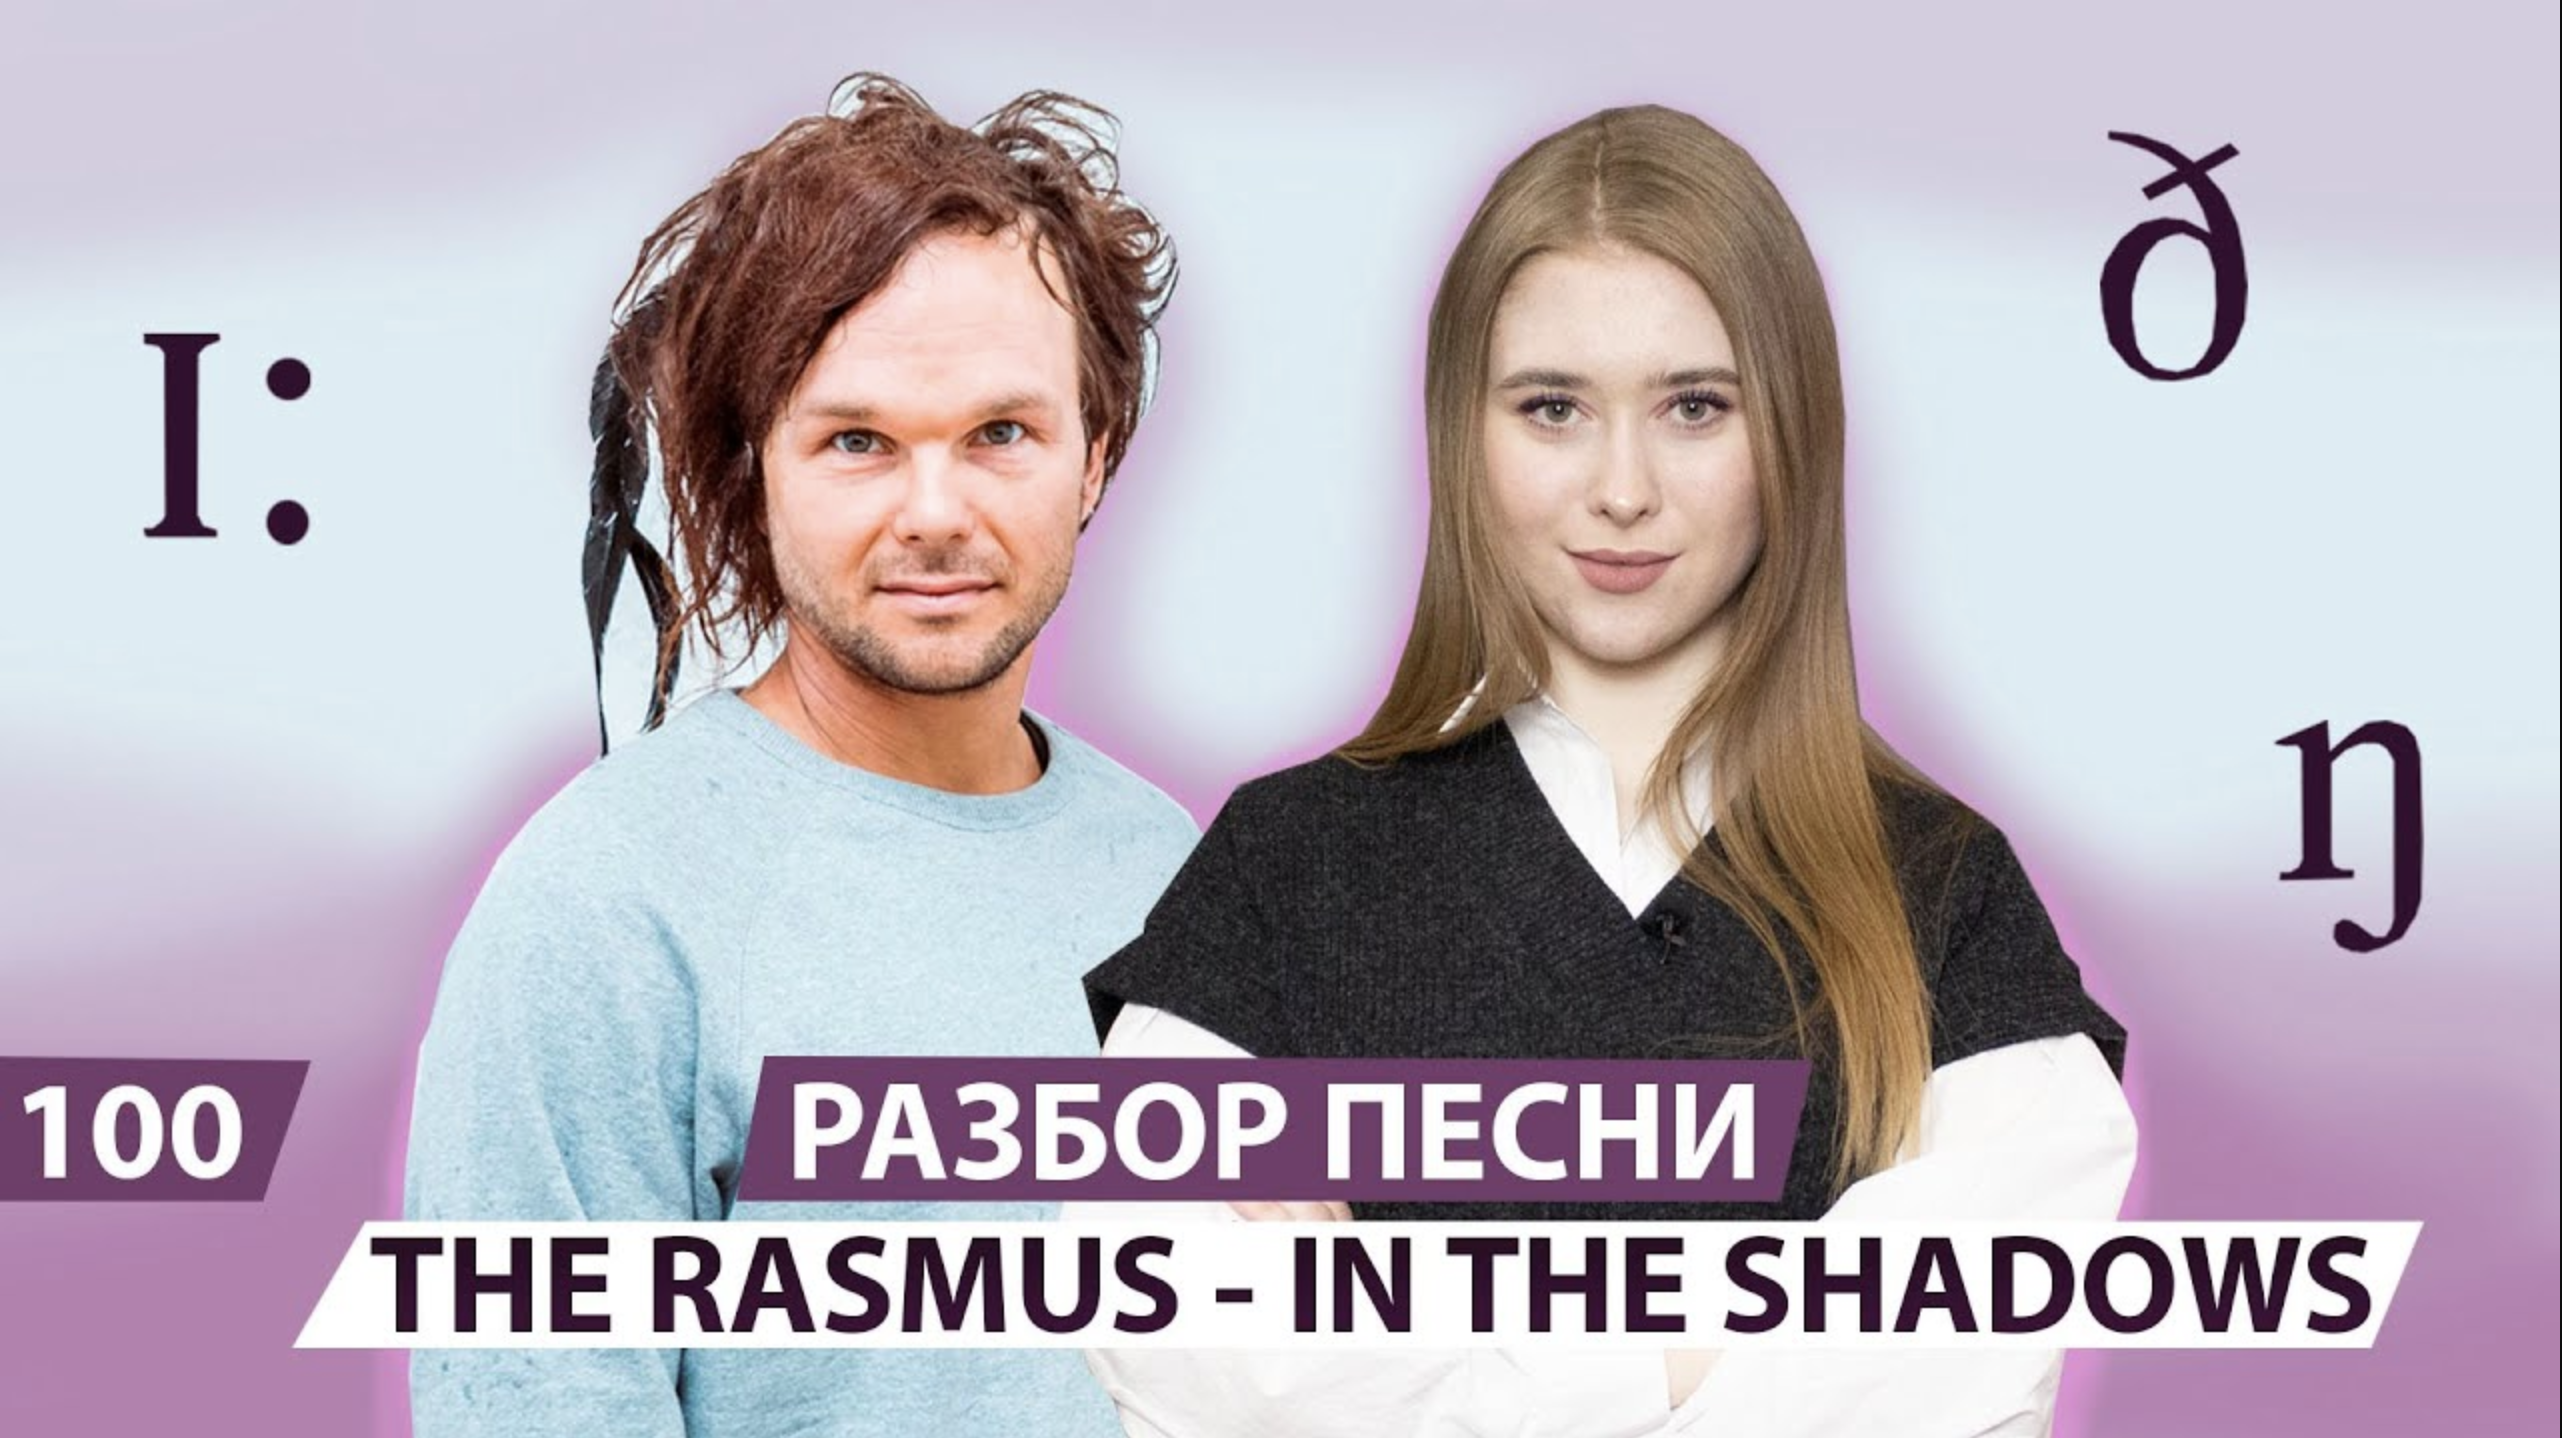 Разбор песни The Rasmus - In the Shadows. Урок вокала 100.